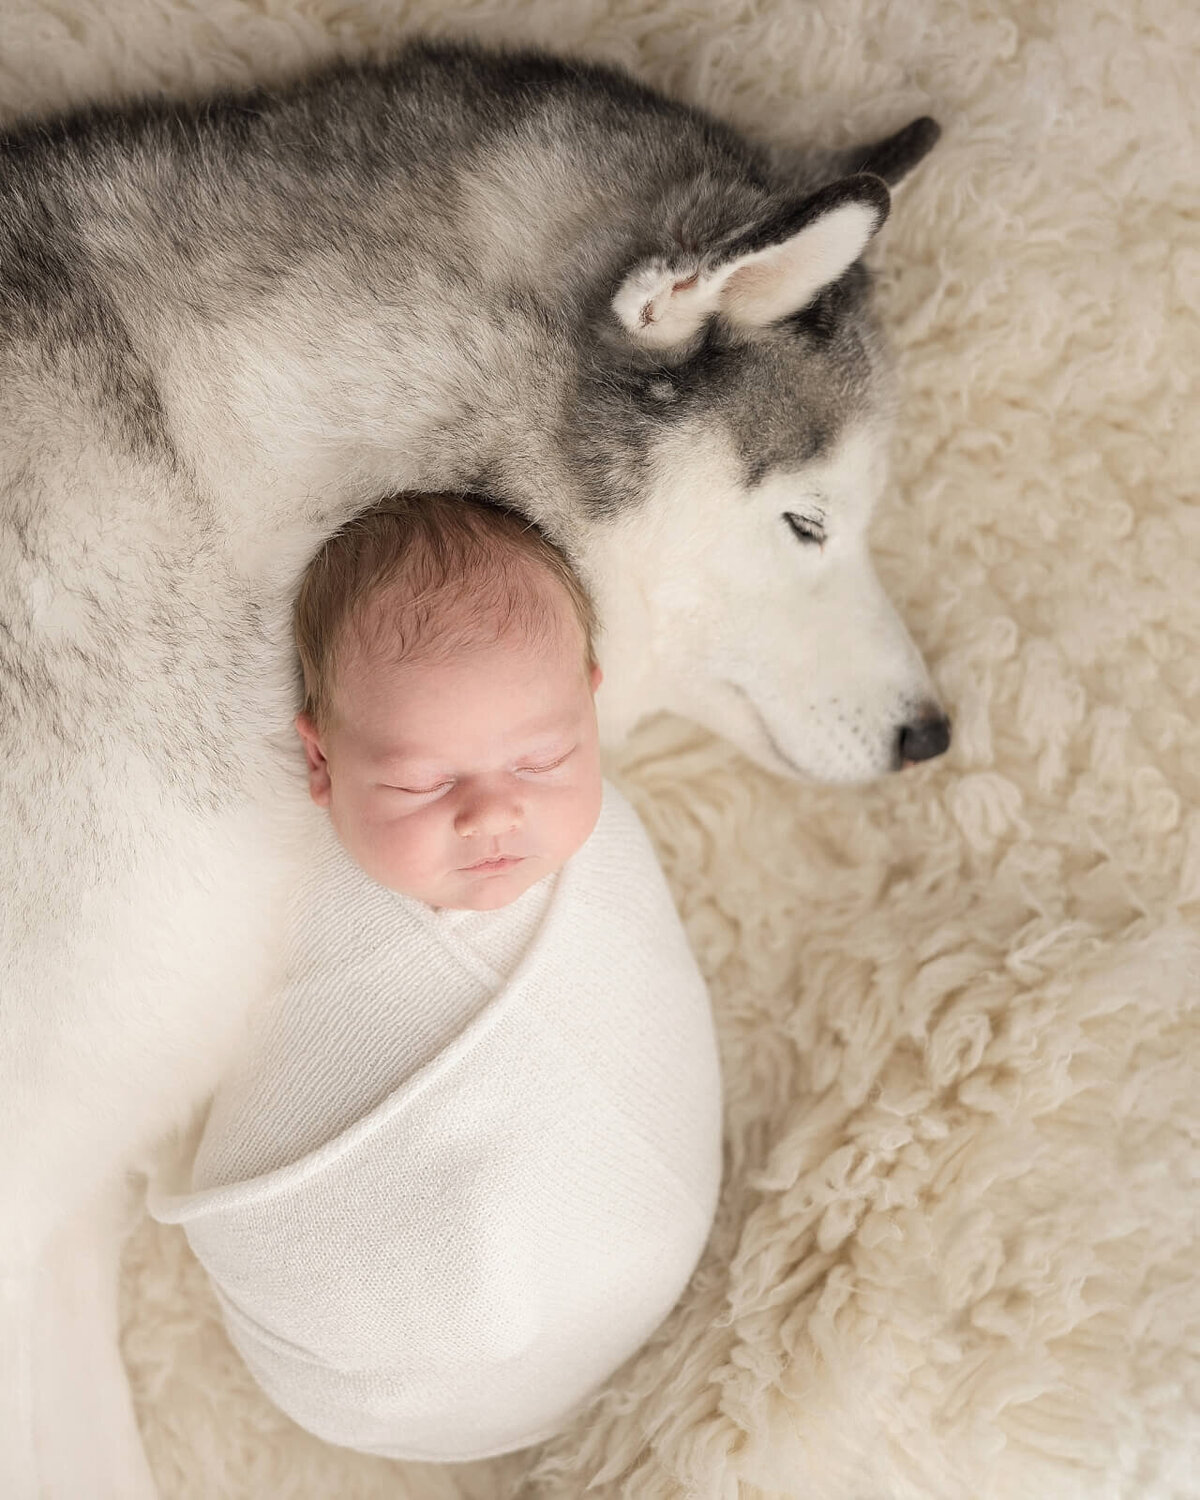 baby boy sleeping with husky dog